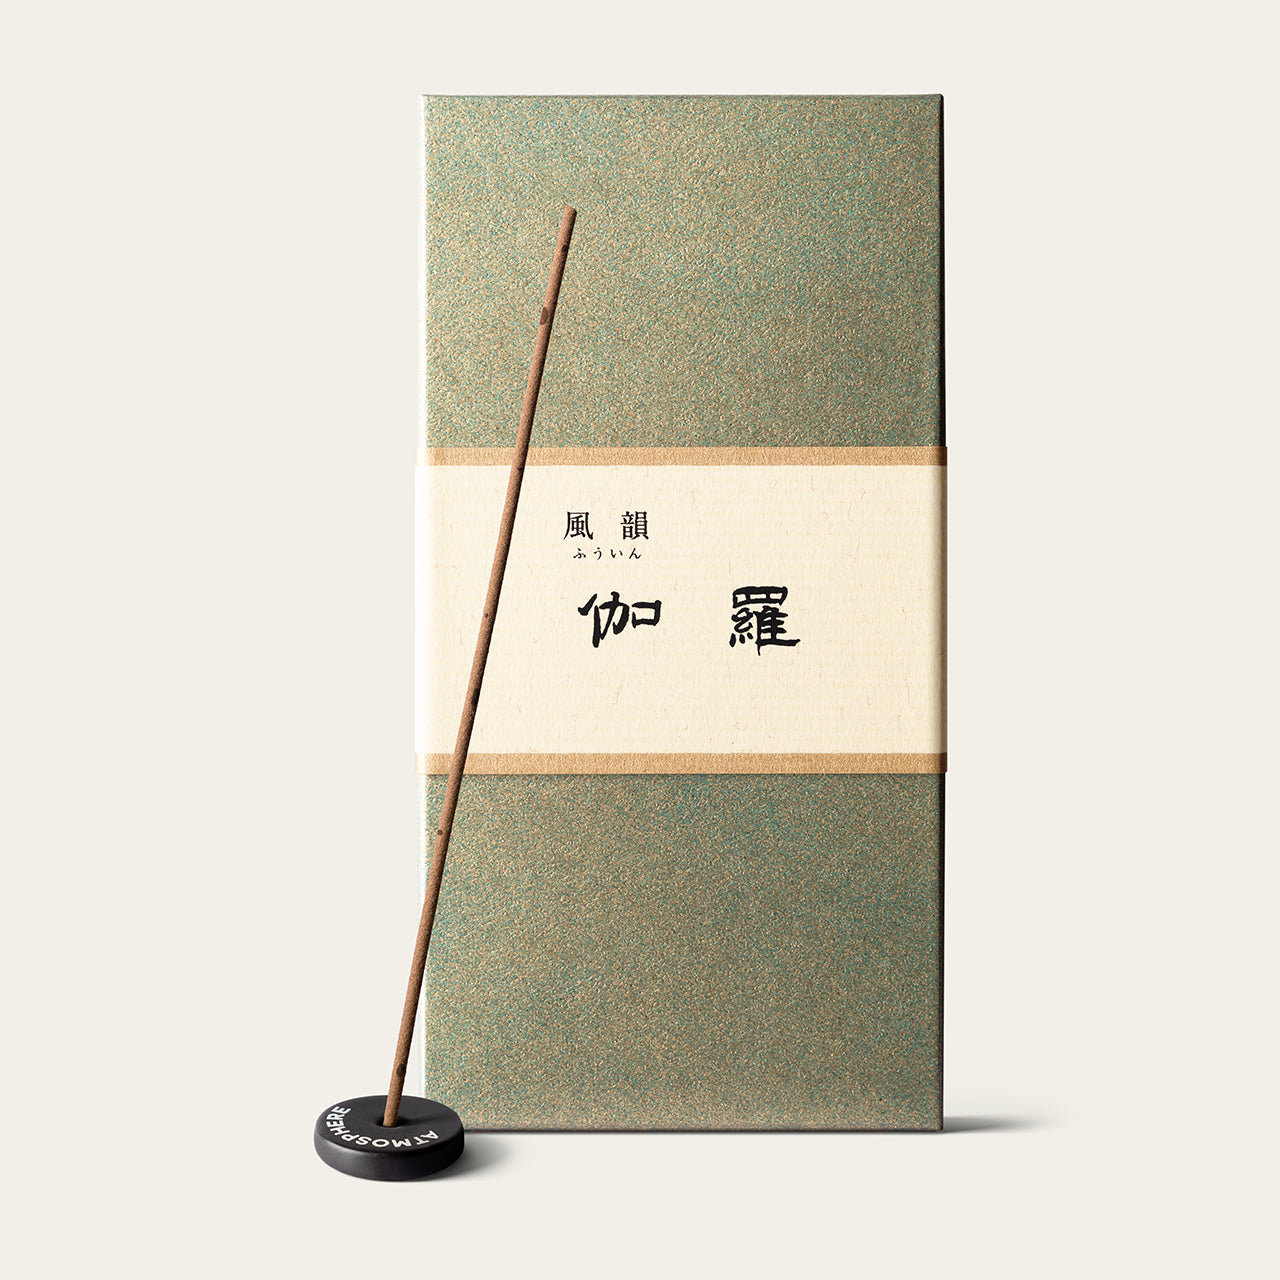 Minorien Fuin Fu-In Kyara Japanese incense sticks (220 sticks) with Atmosphere ceramic incense holder